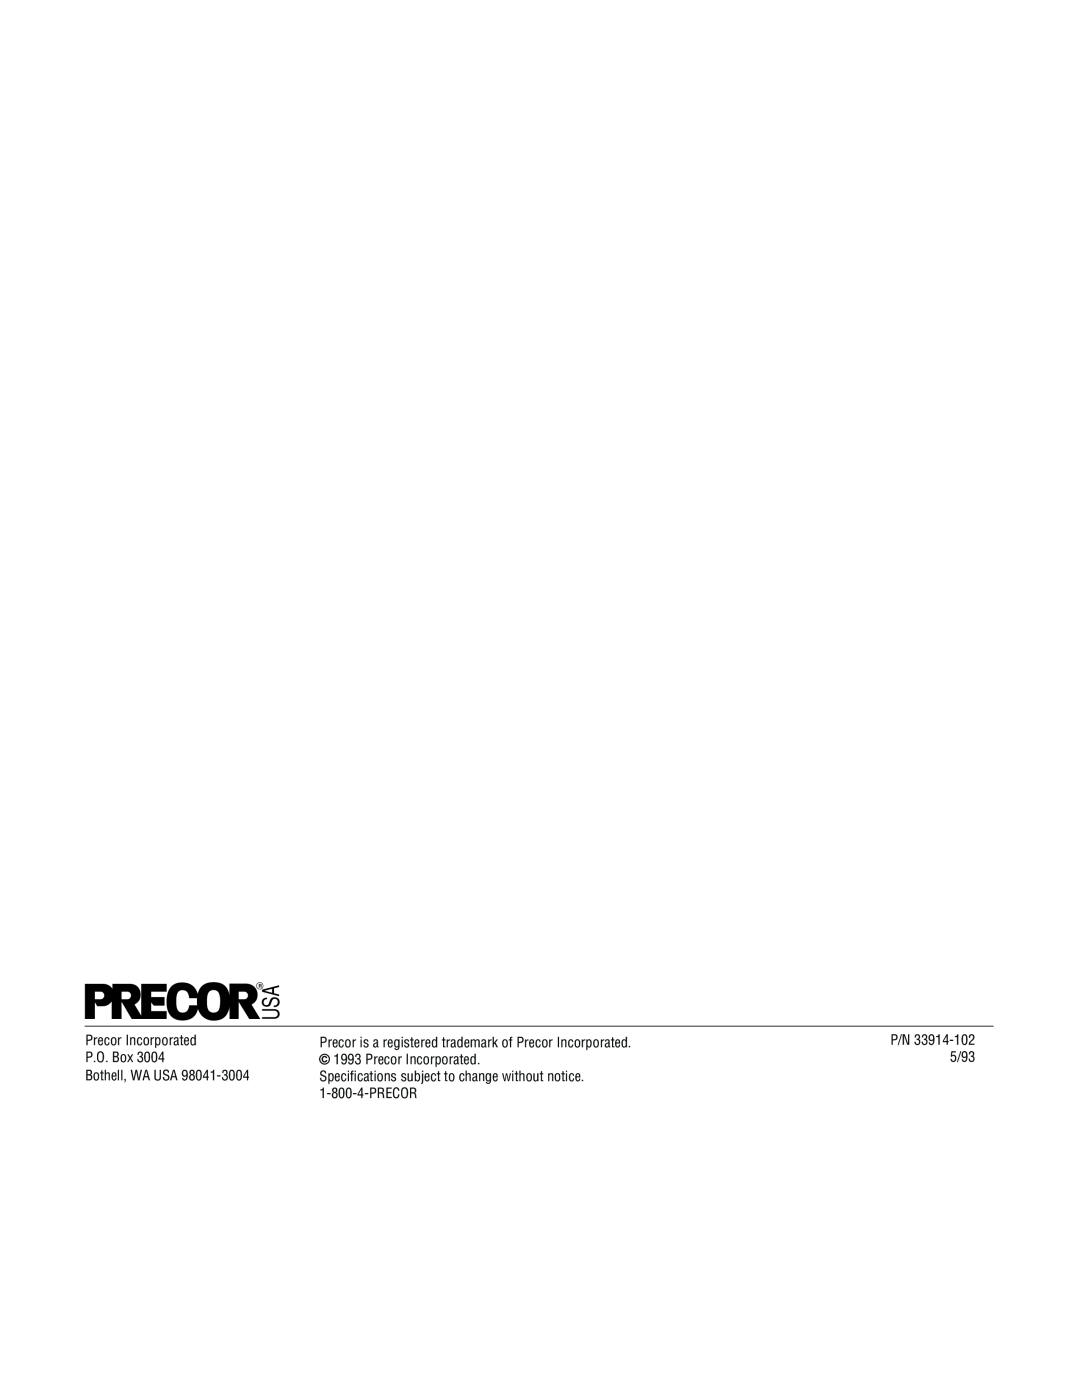 Precor 719e Precor Incorporated P.O. Box Bothell, WA USA, Specifications subject to change without notice 1-800-4-PRECOR 